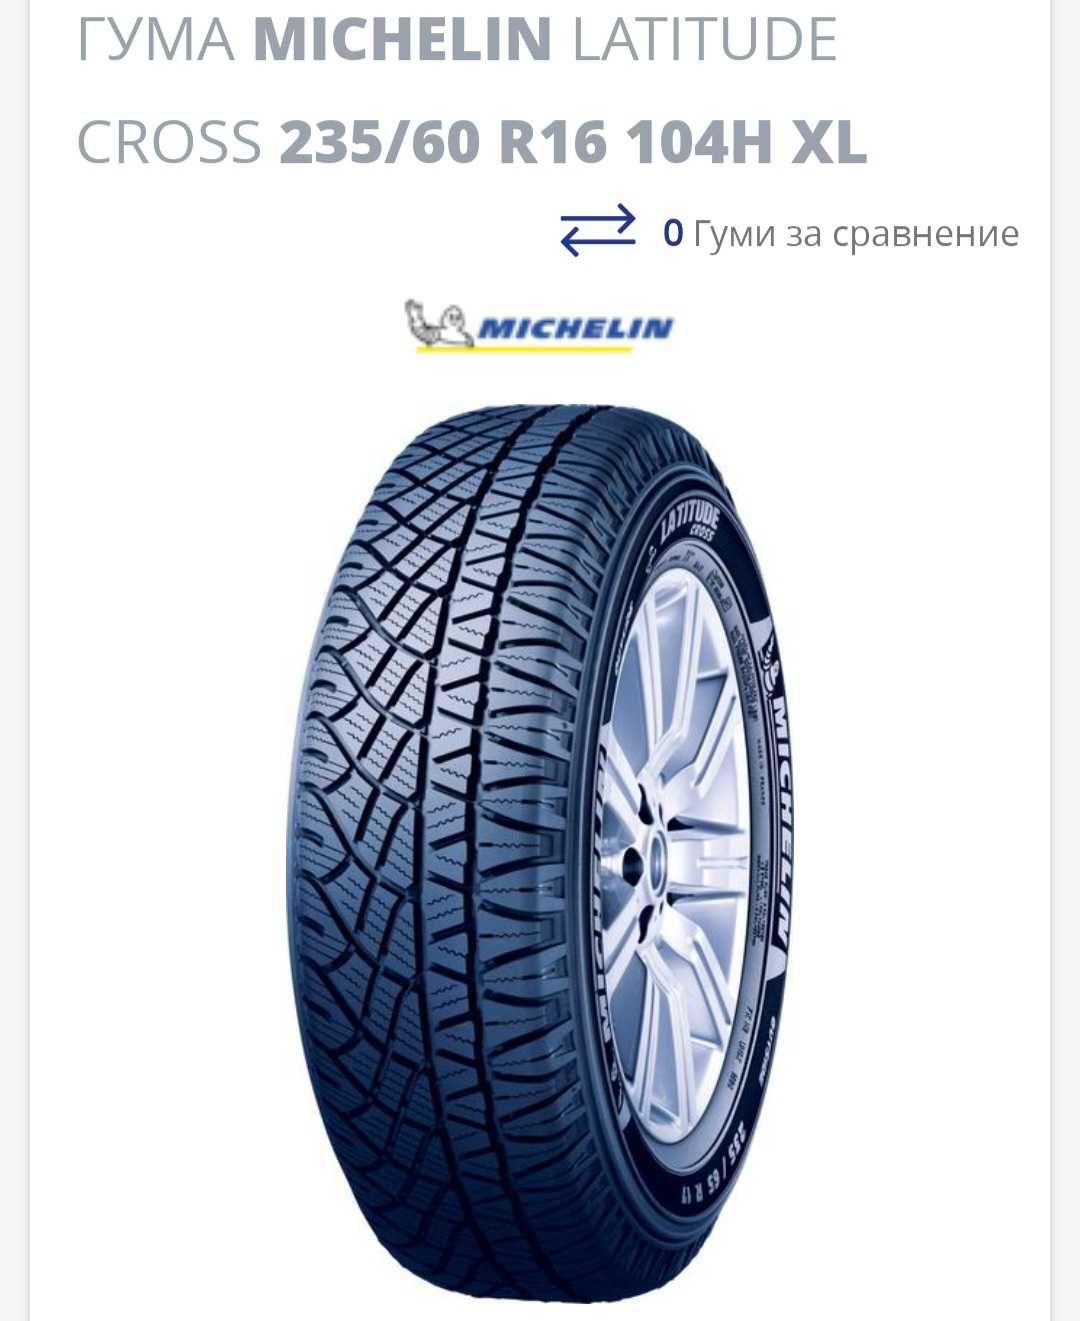 Michelin Latitude Cross
235/60 R16 104H XL